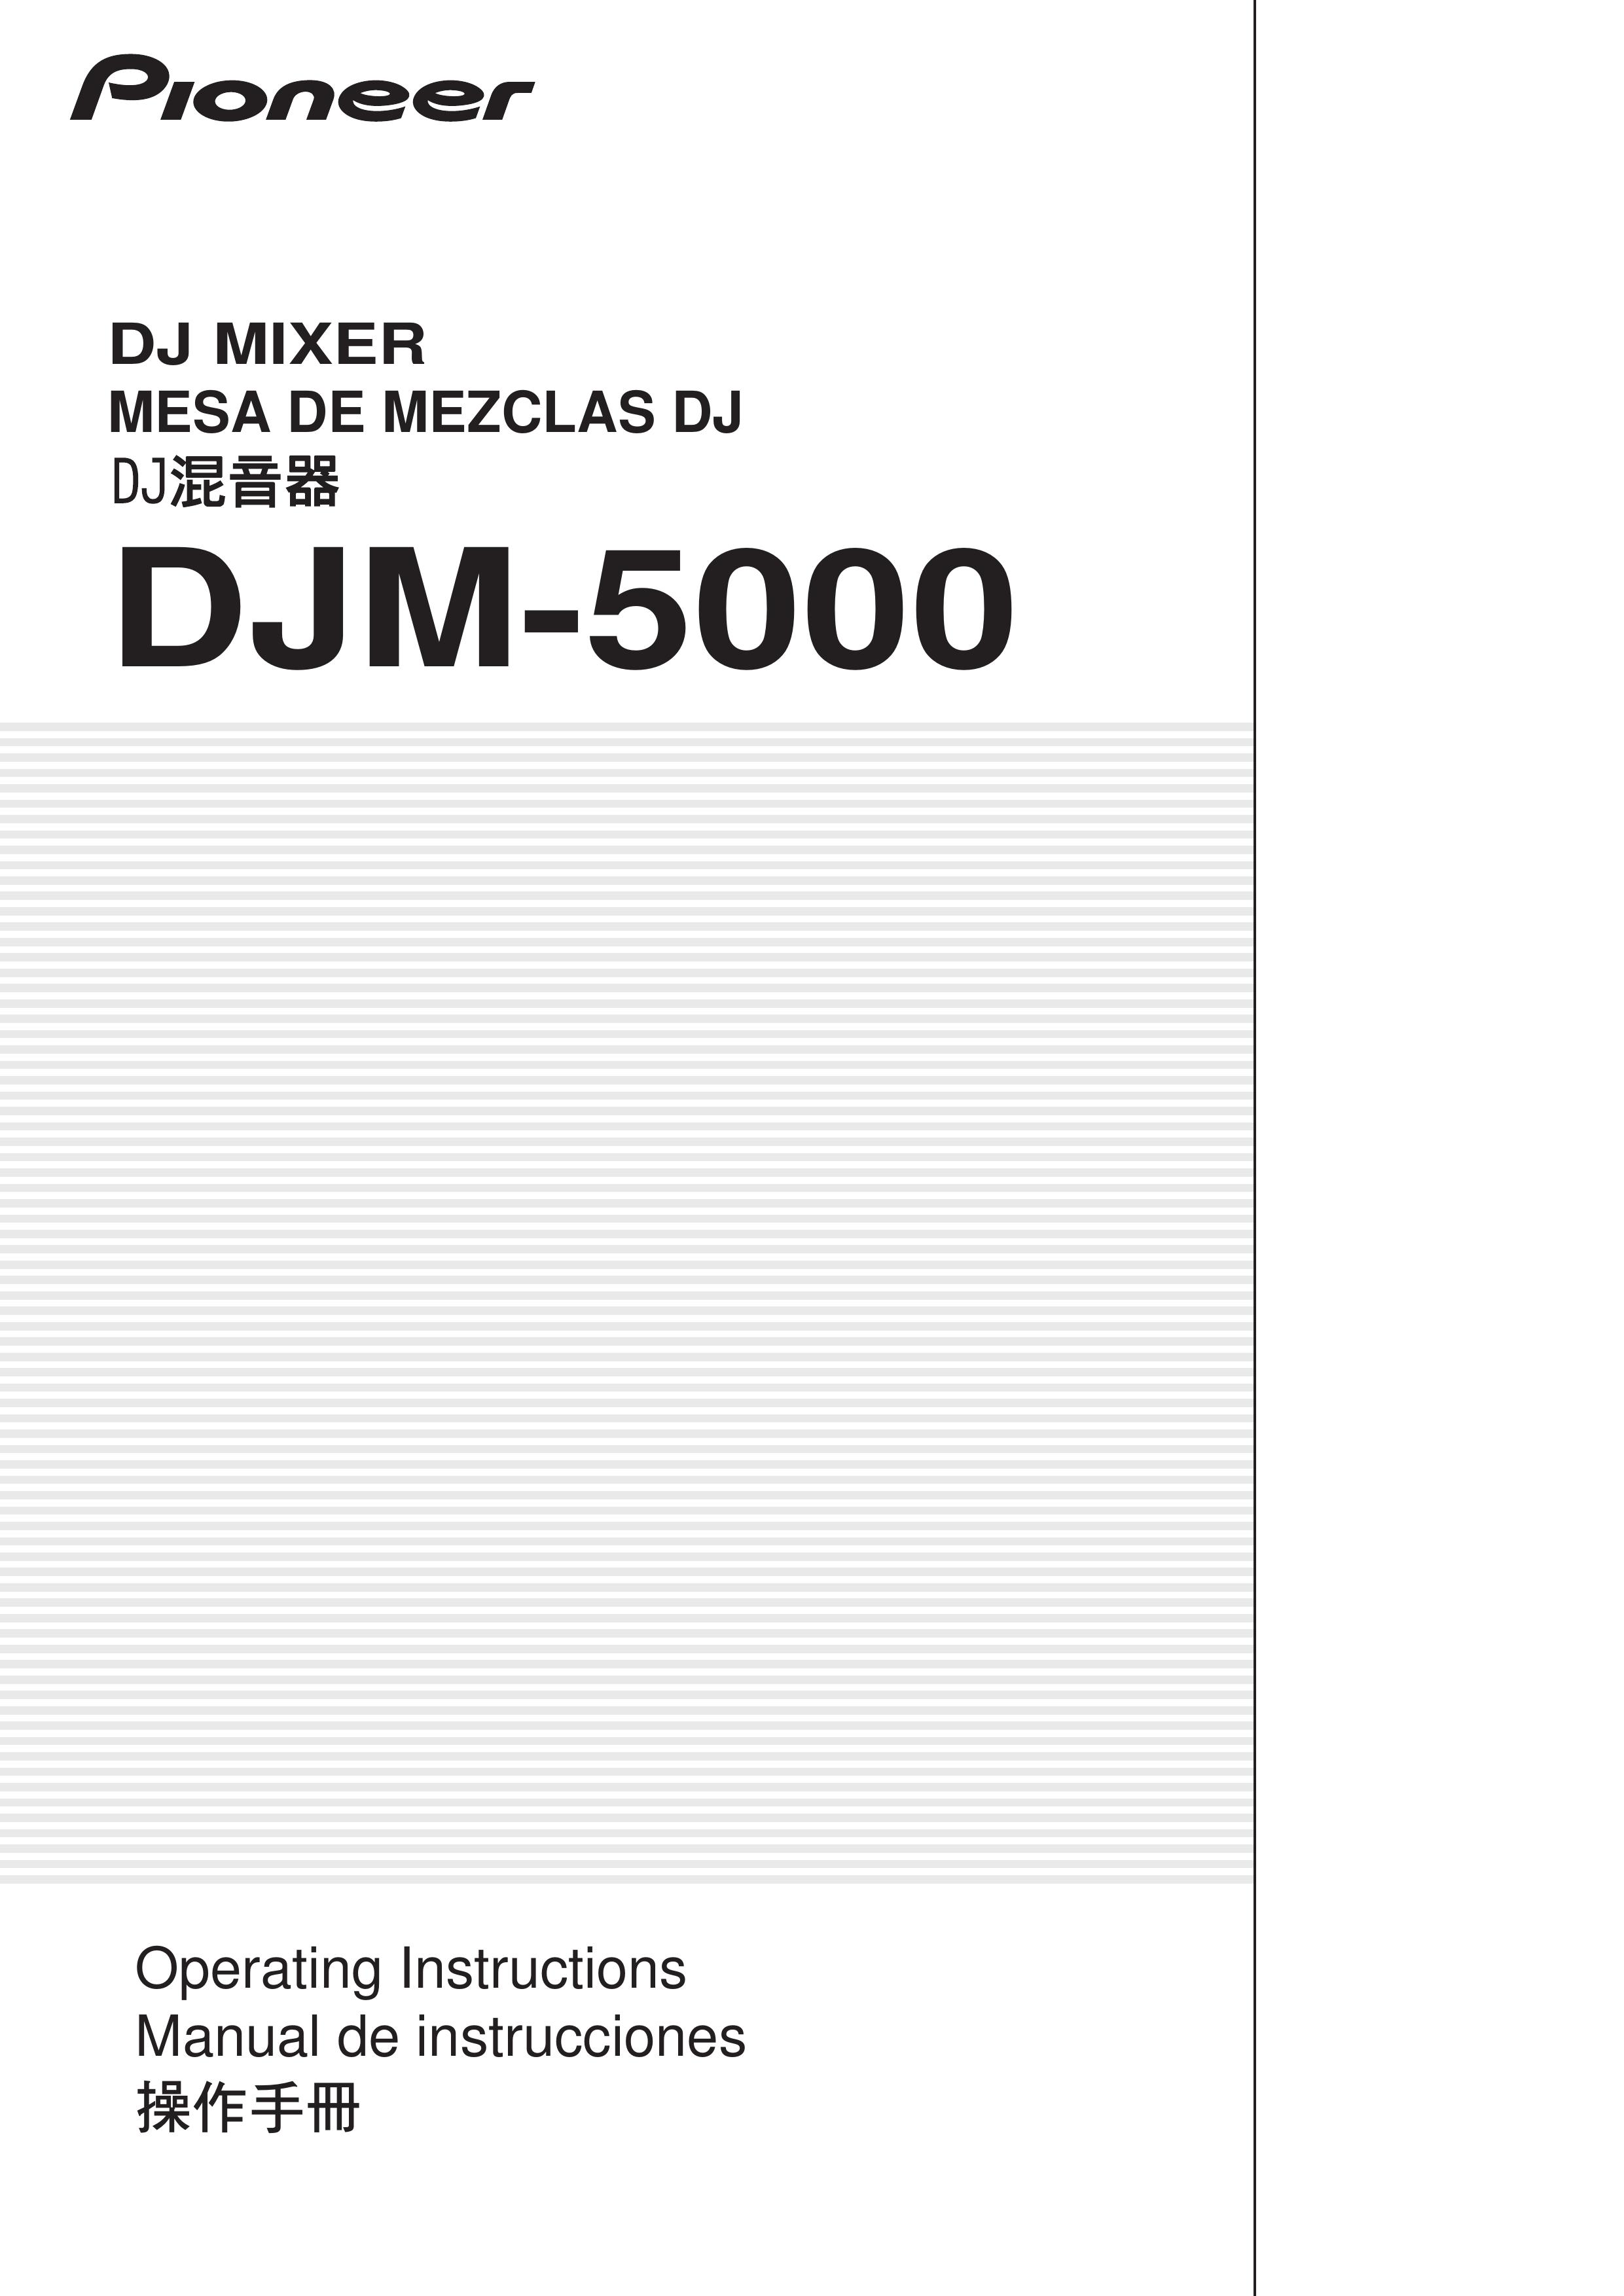 Pioneer DJM-5000 DJ Equipment User Manual